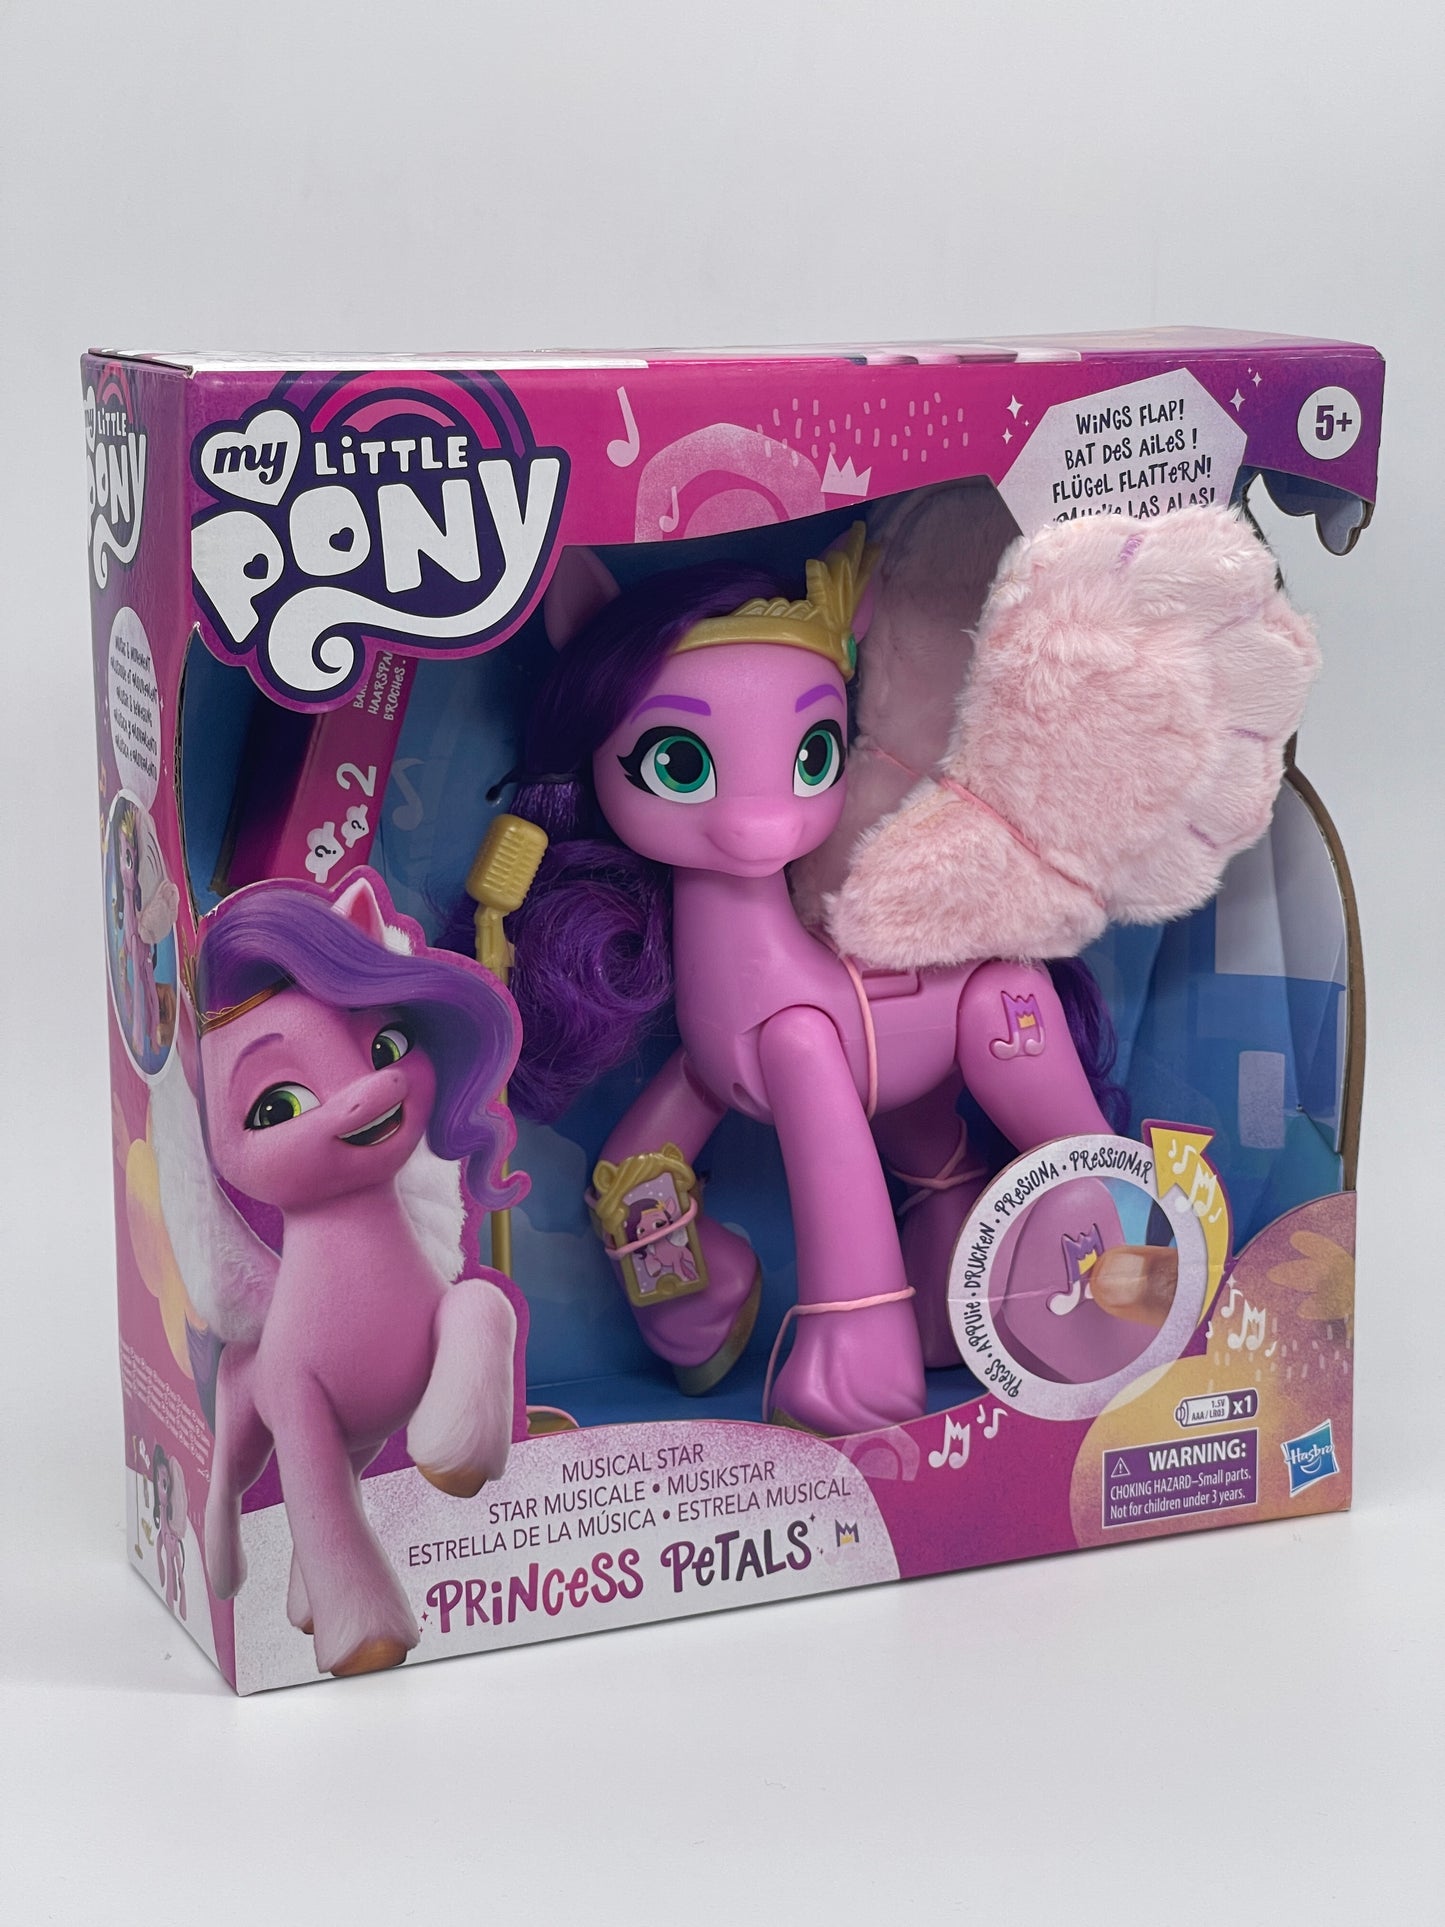 My Little Pony "Princess Petals" Musikstar Musical Star - Flügel flattern! (Hasbro)